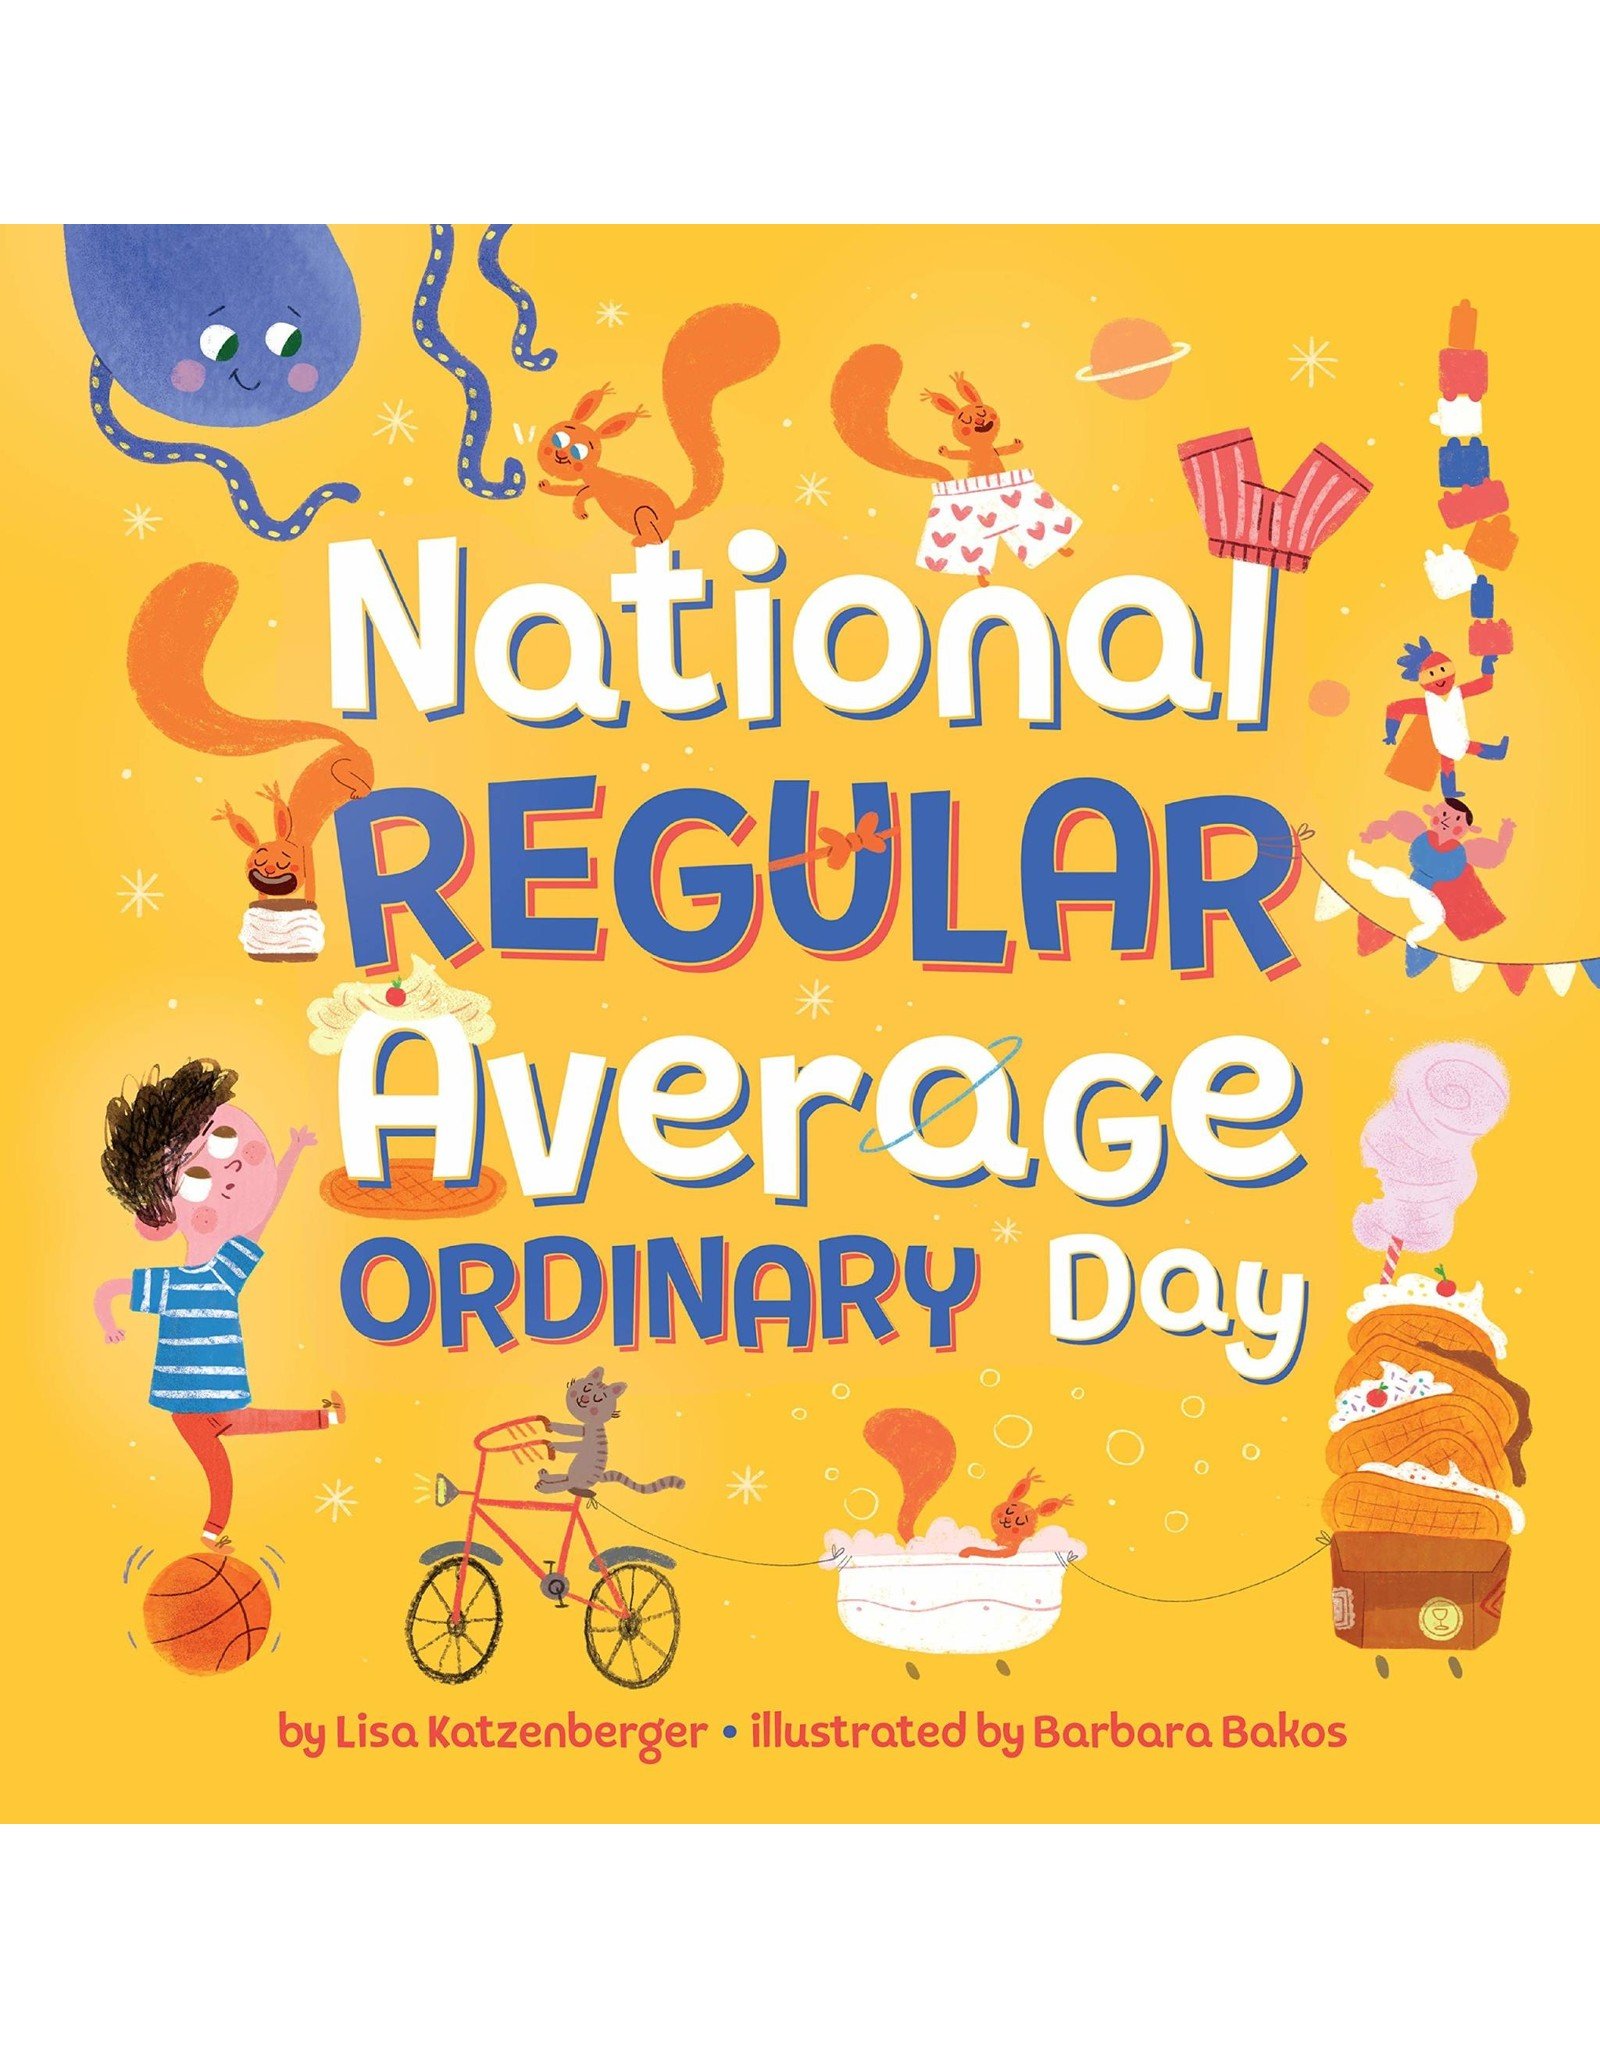 National Regular Average Ordinary Day - Lisa Katzenberger